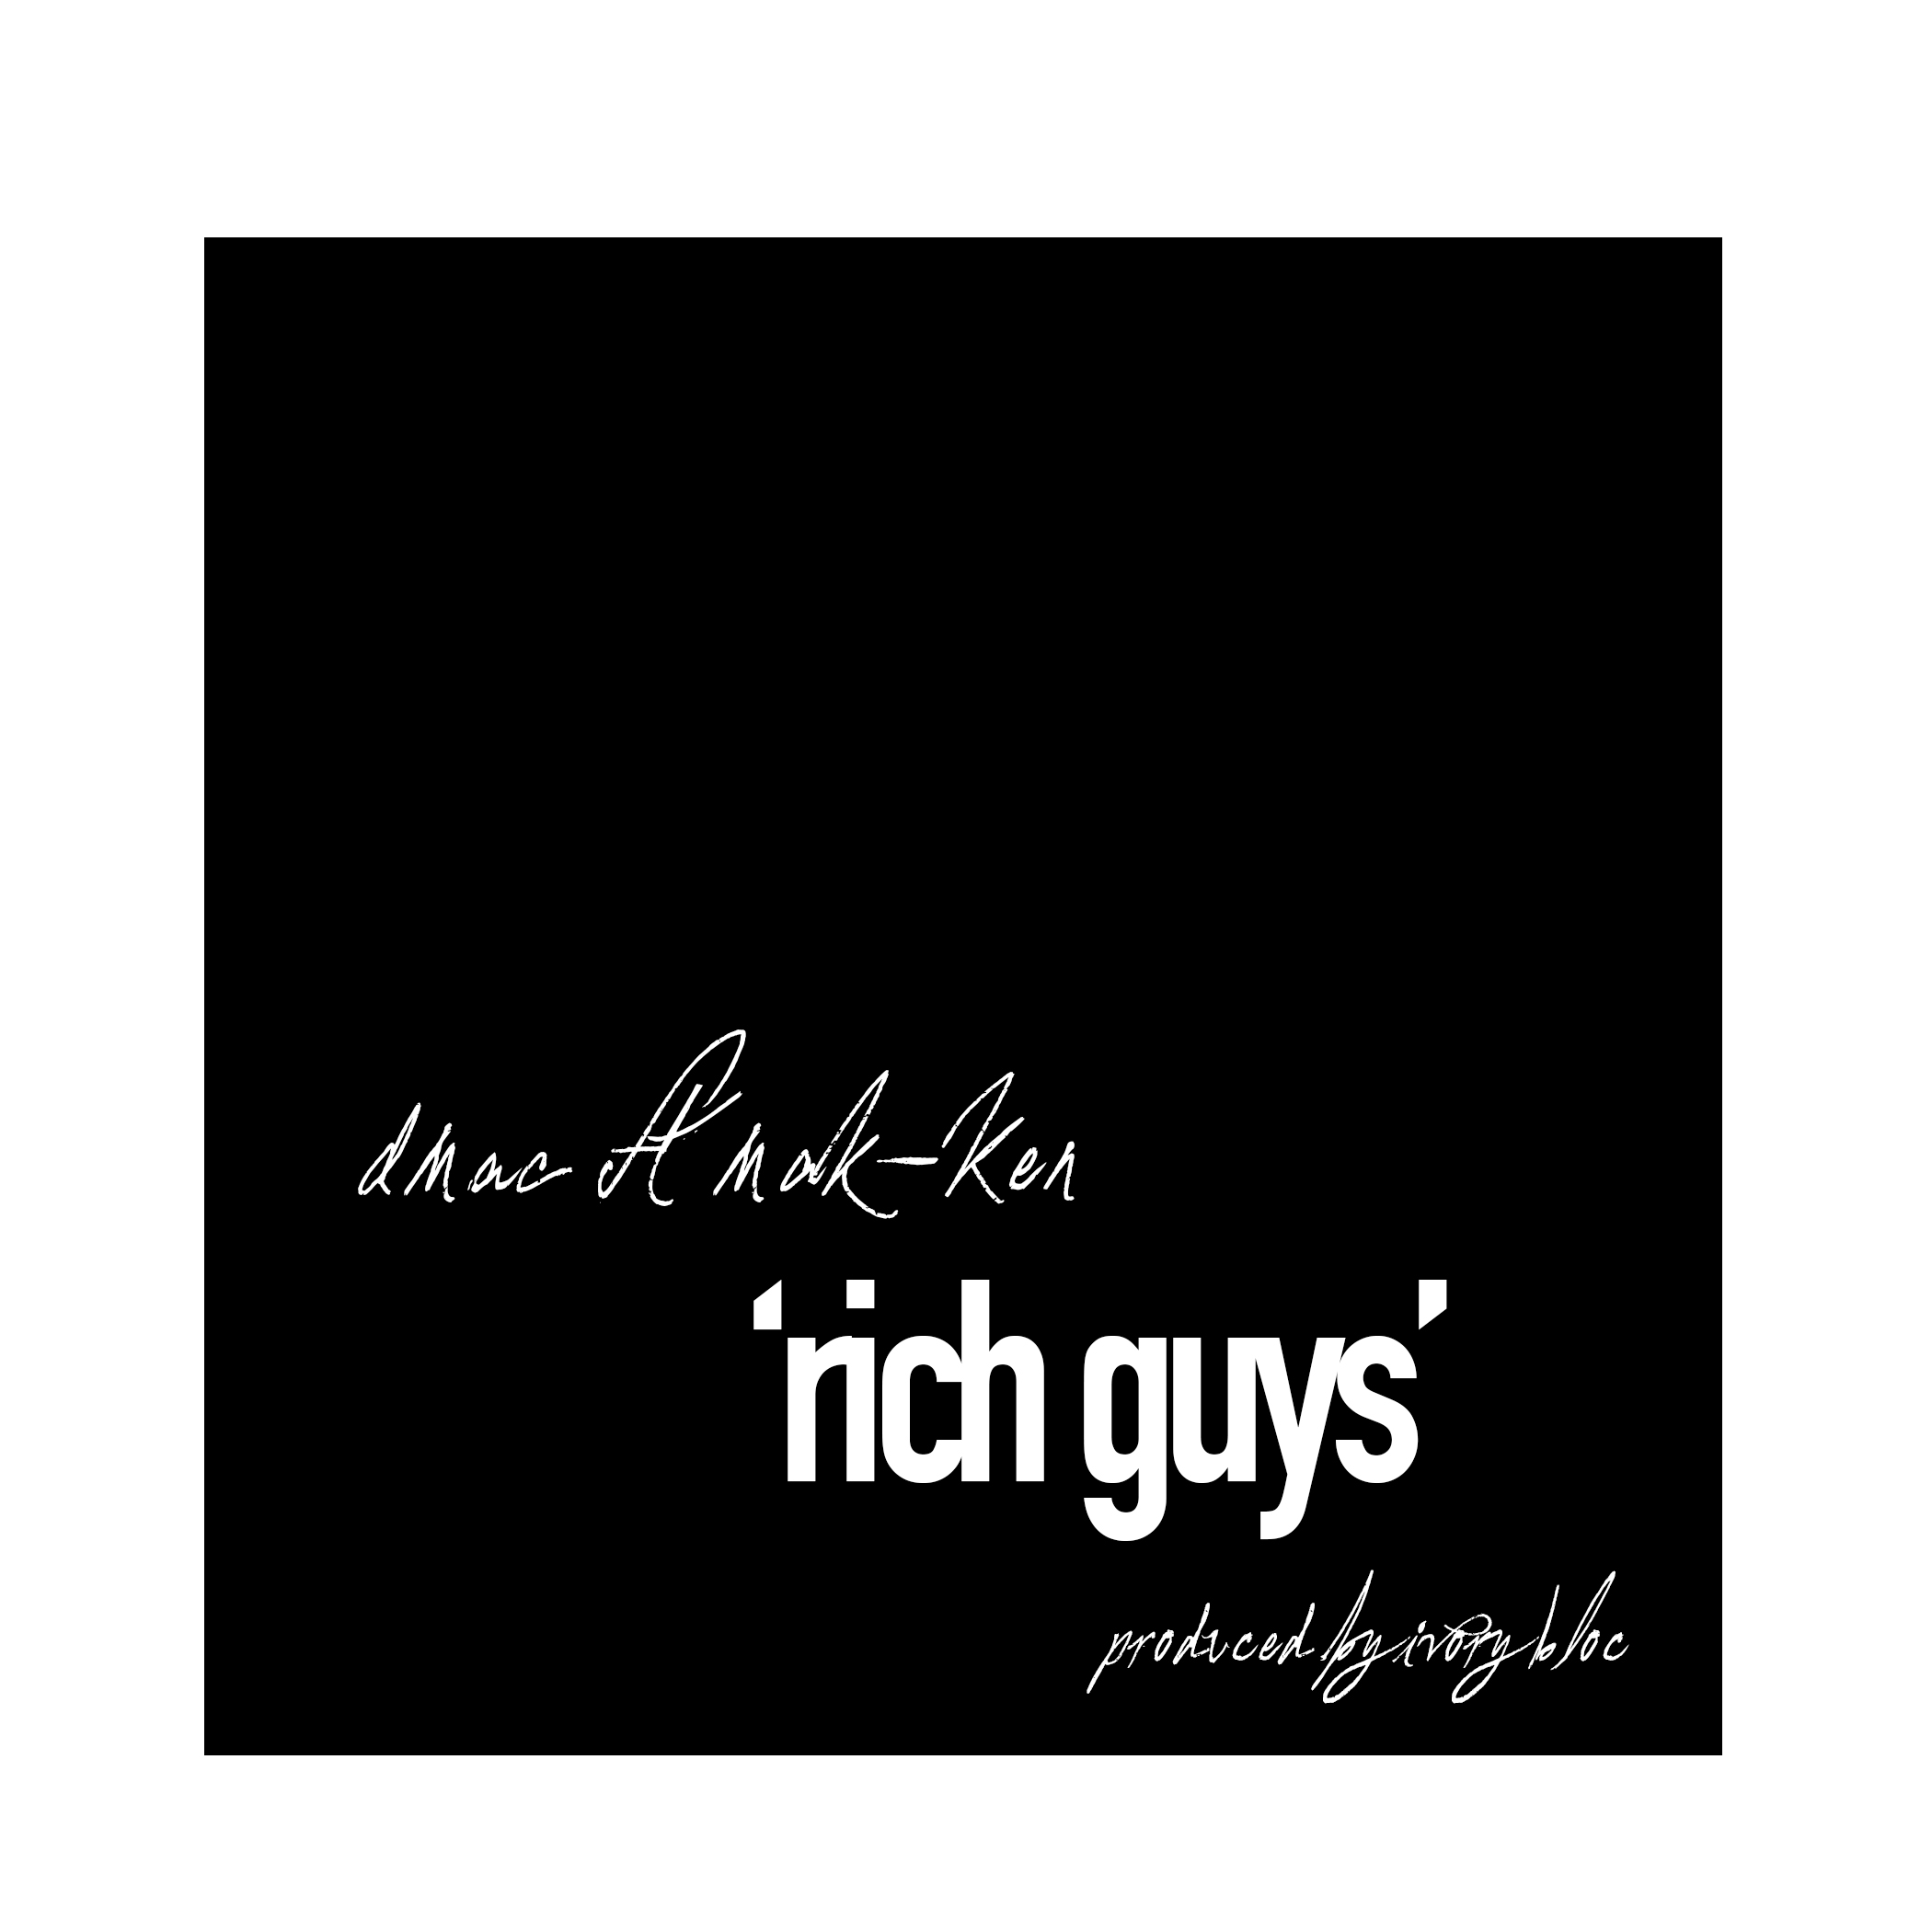 rich guys